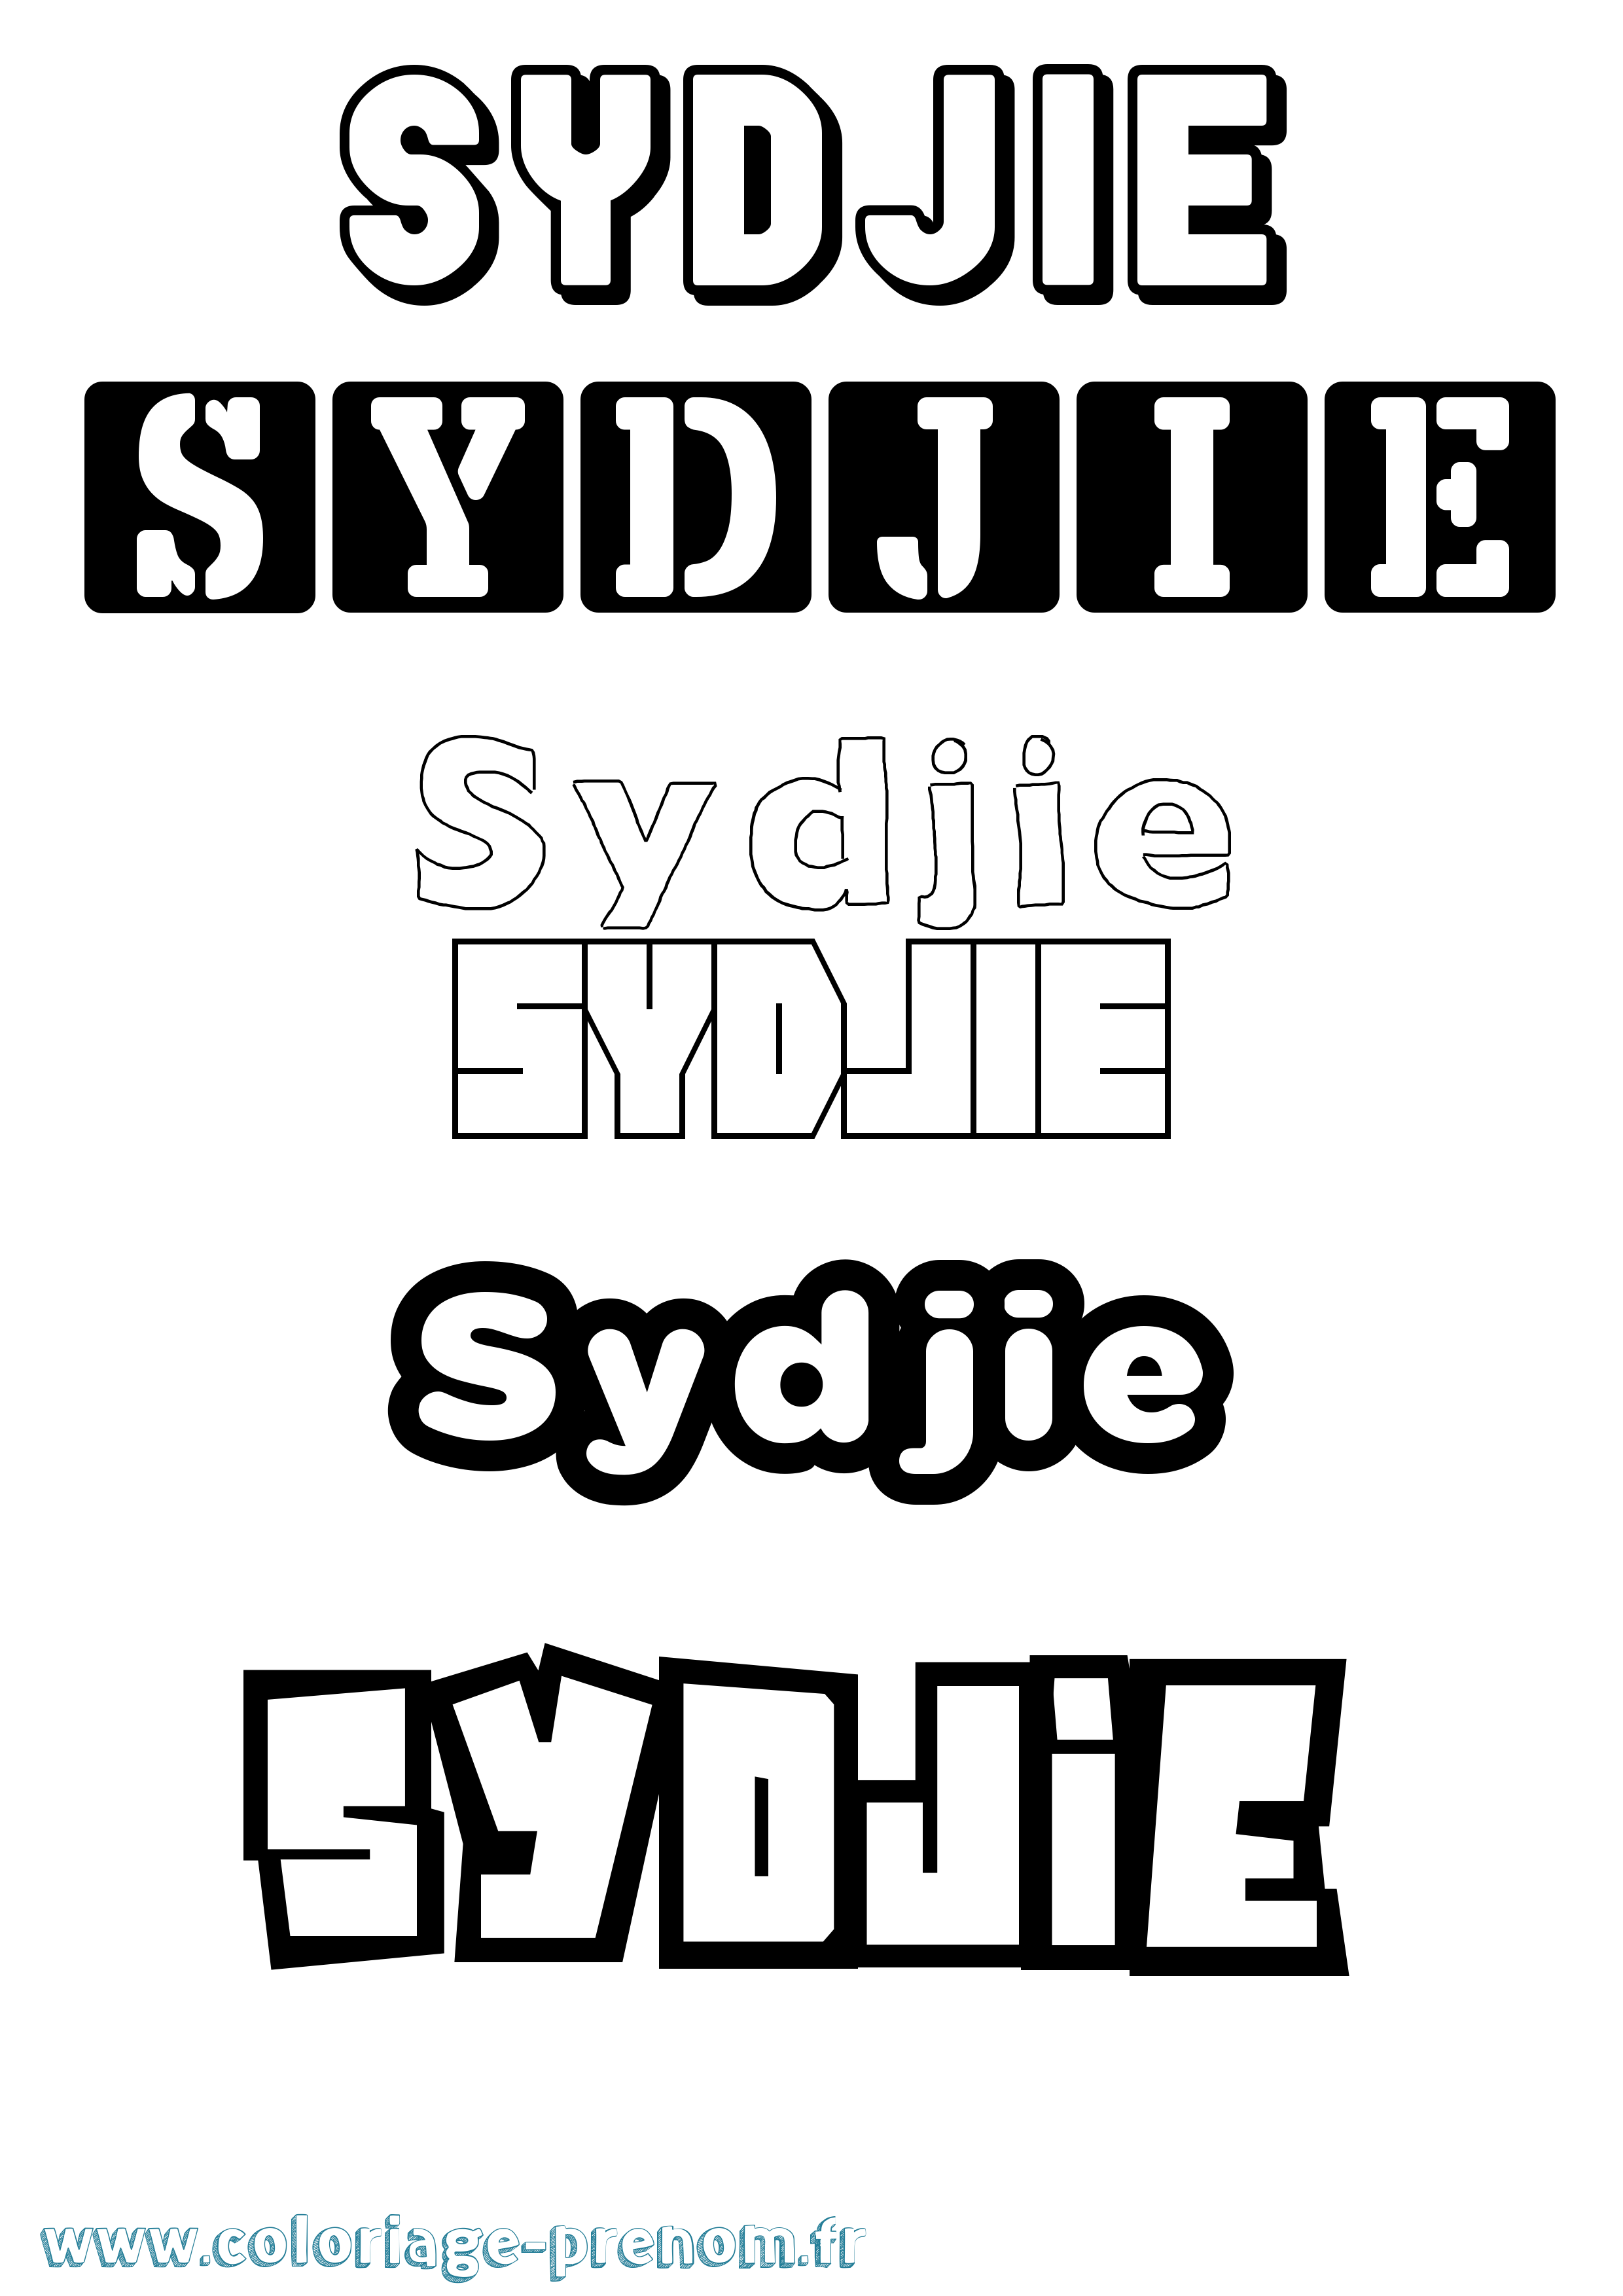 Coloriage prénom Sydjie Simple